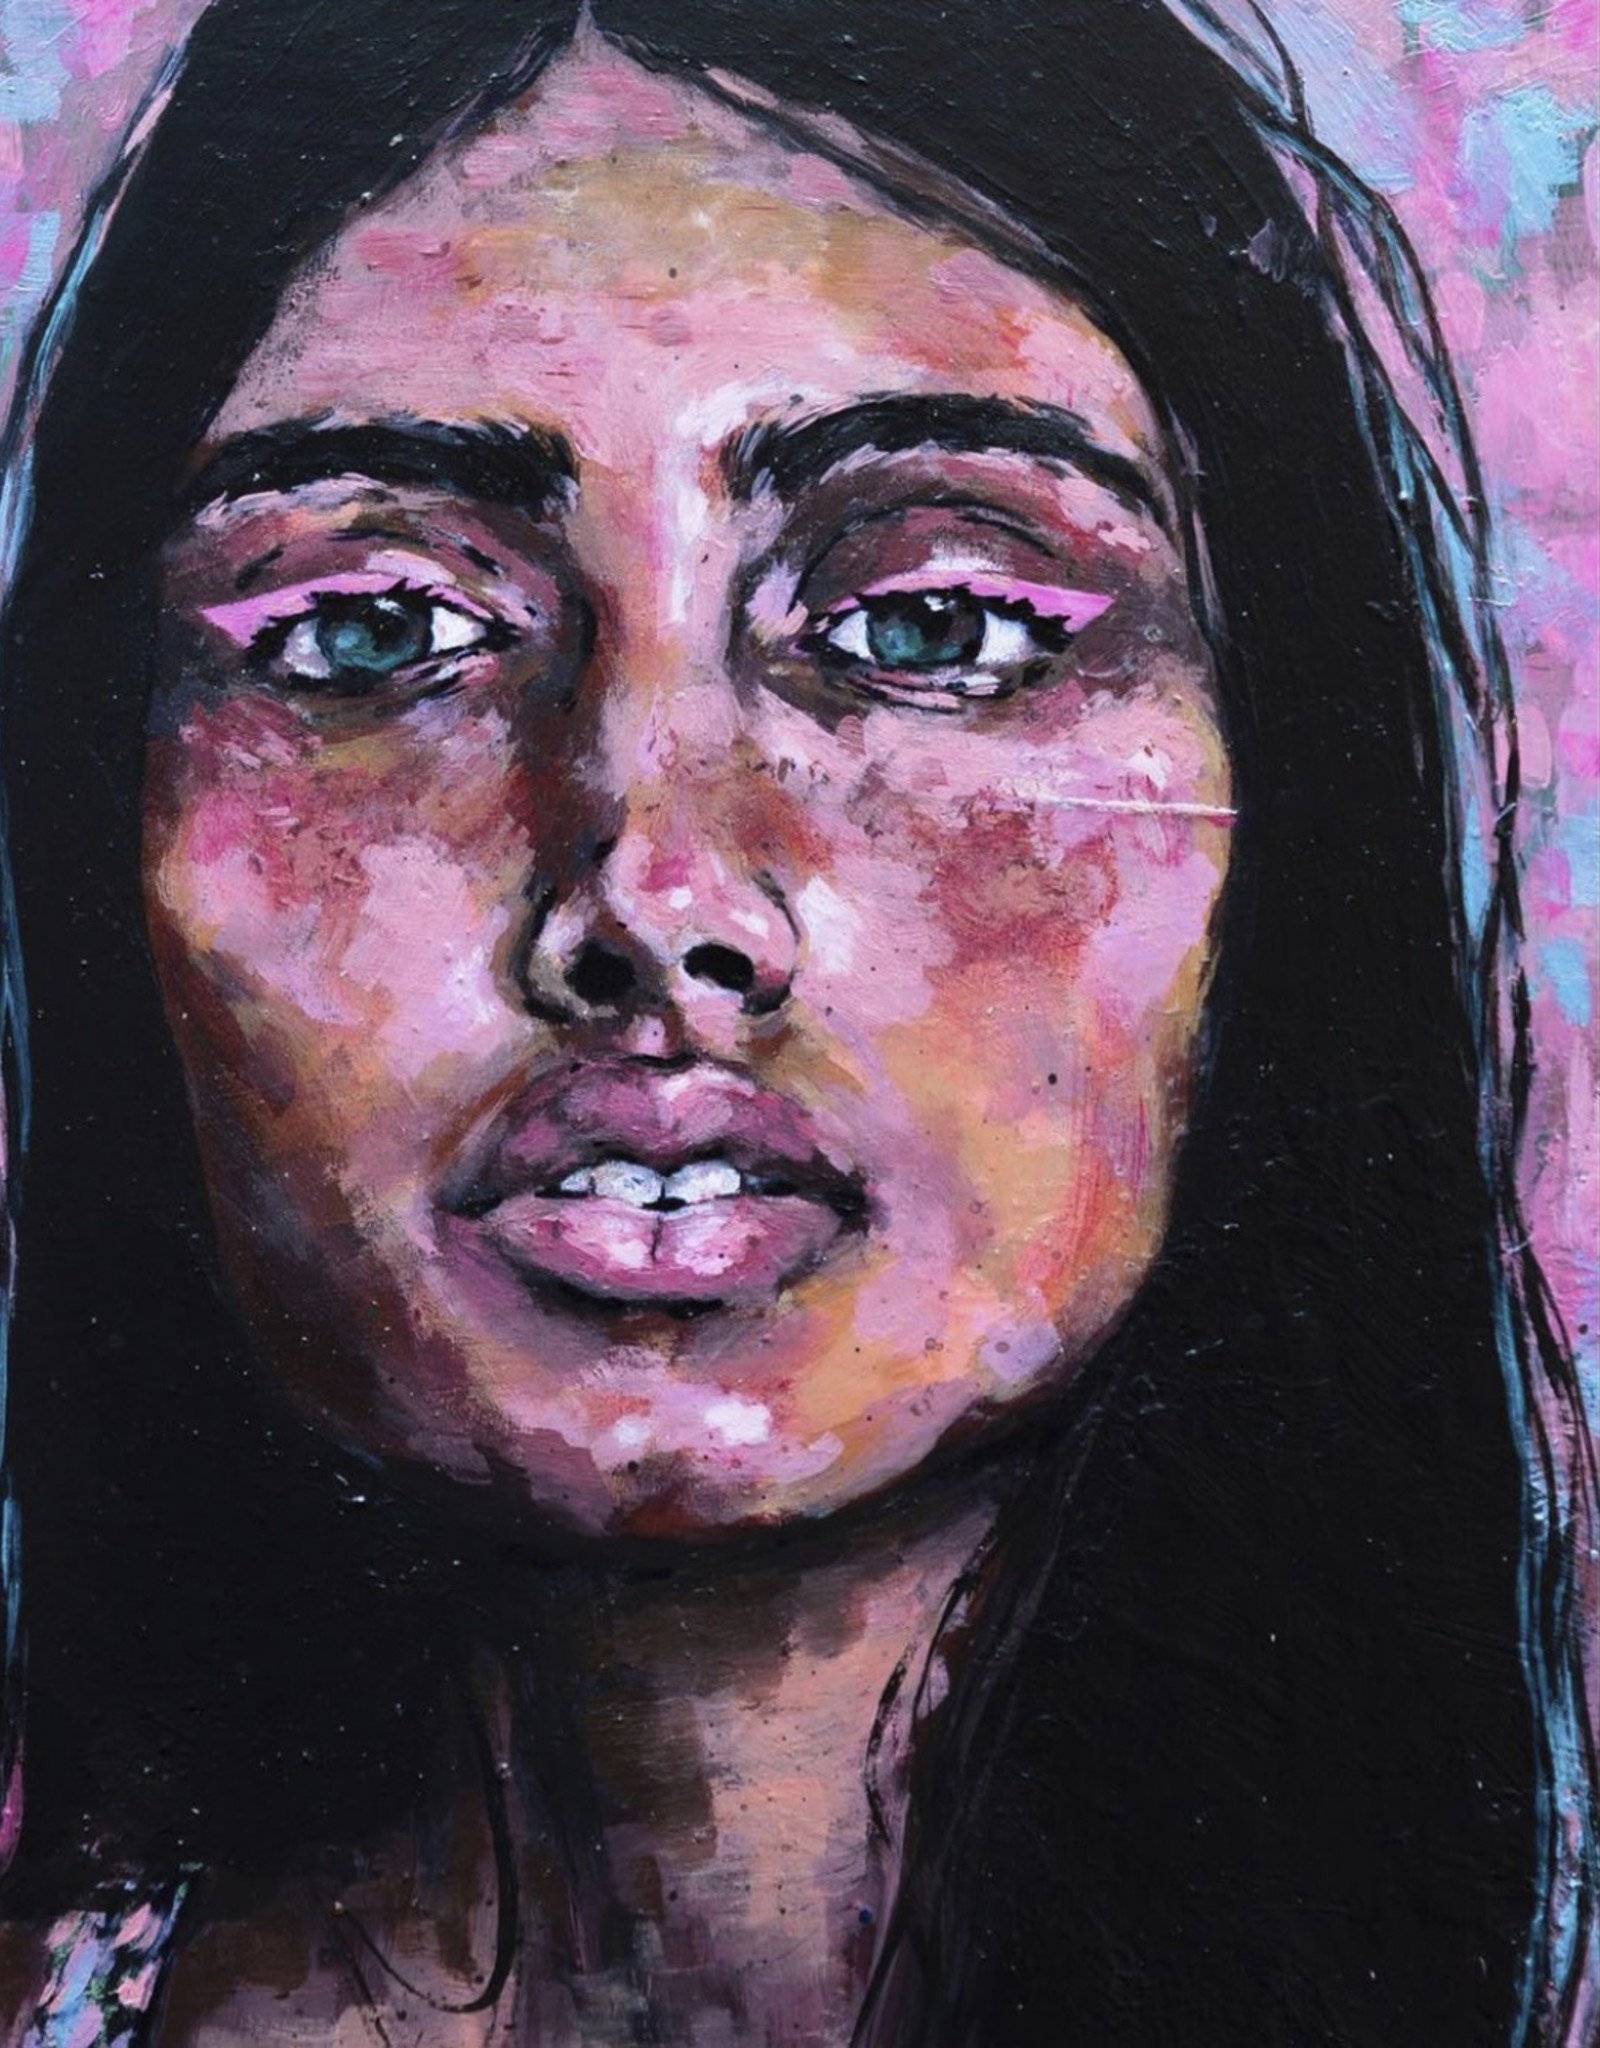 Emily Bitar Original Acrylic Painting "As She Rose" 8x10